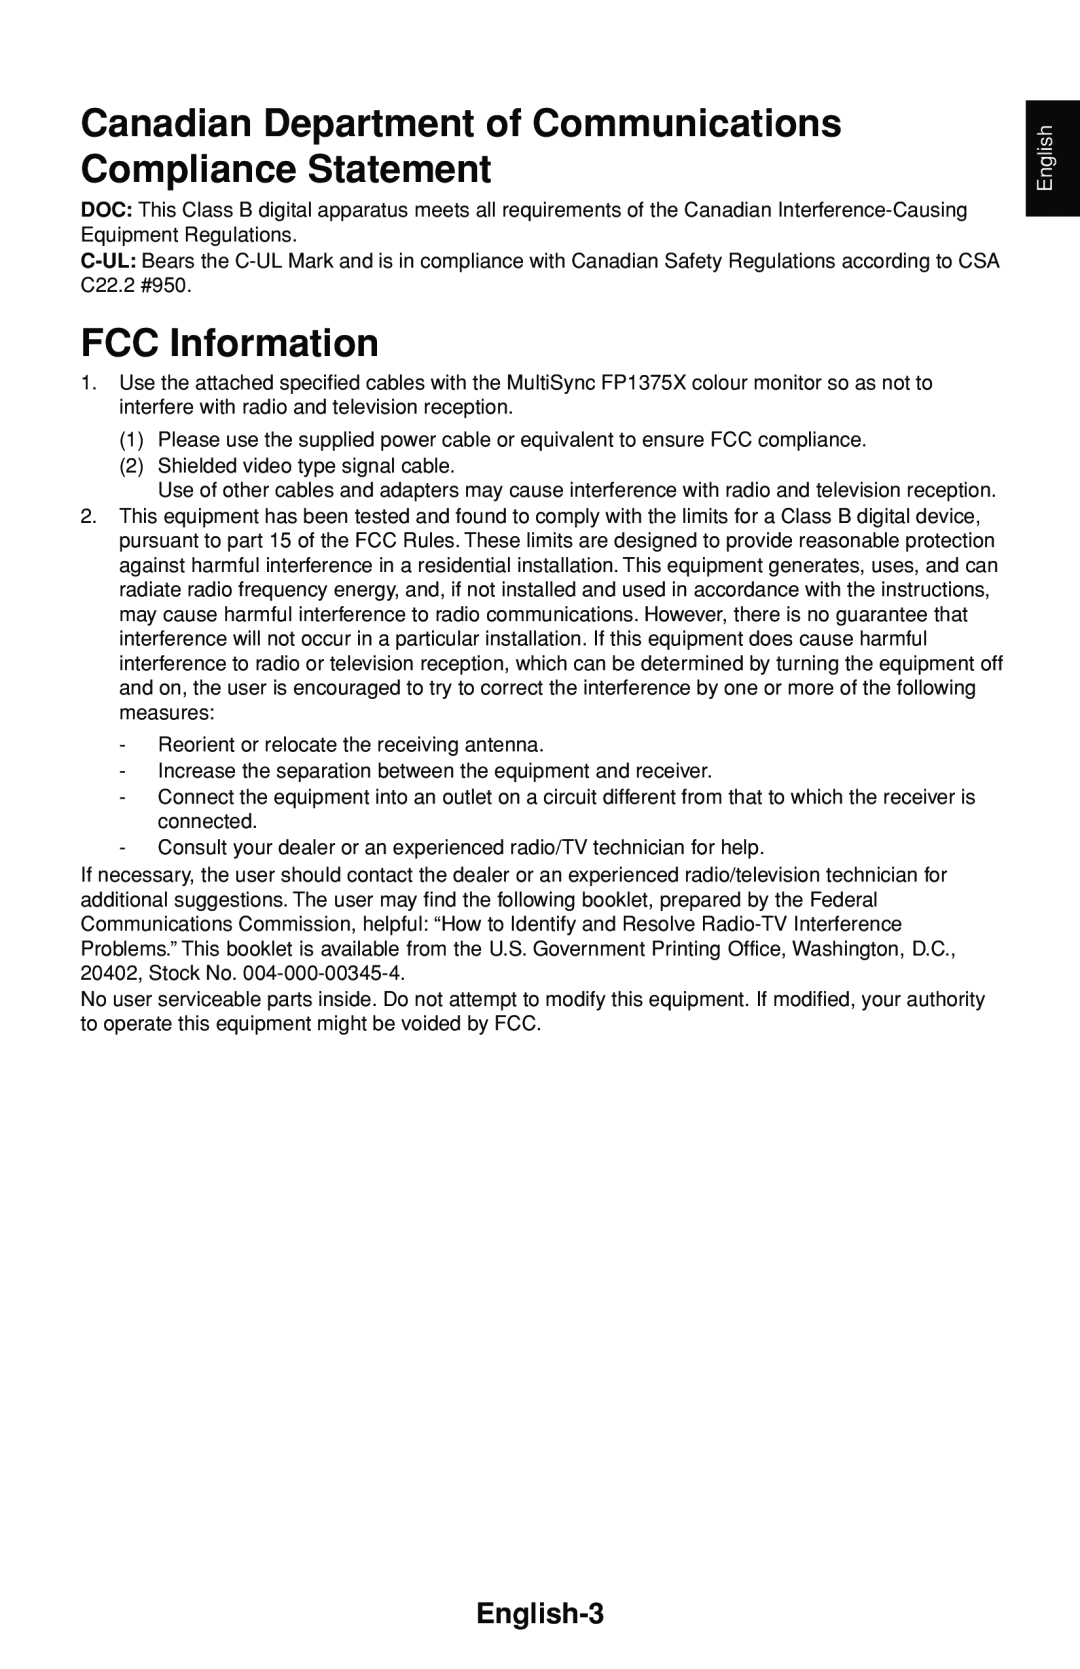 NEC FP1375X user manual FCC Information, English-3 